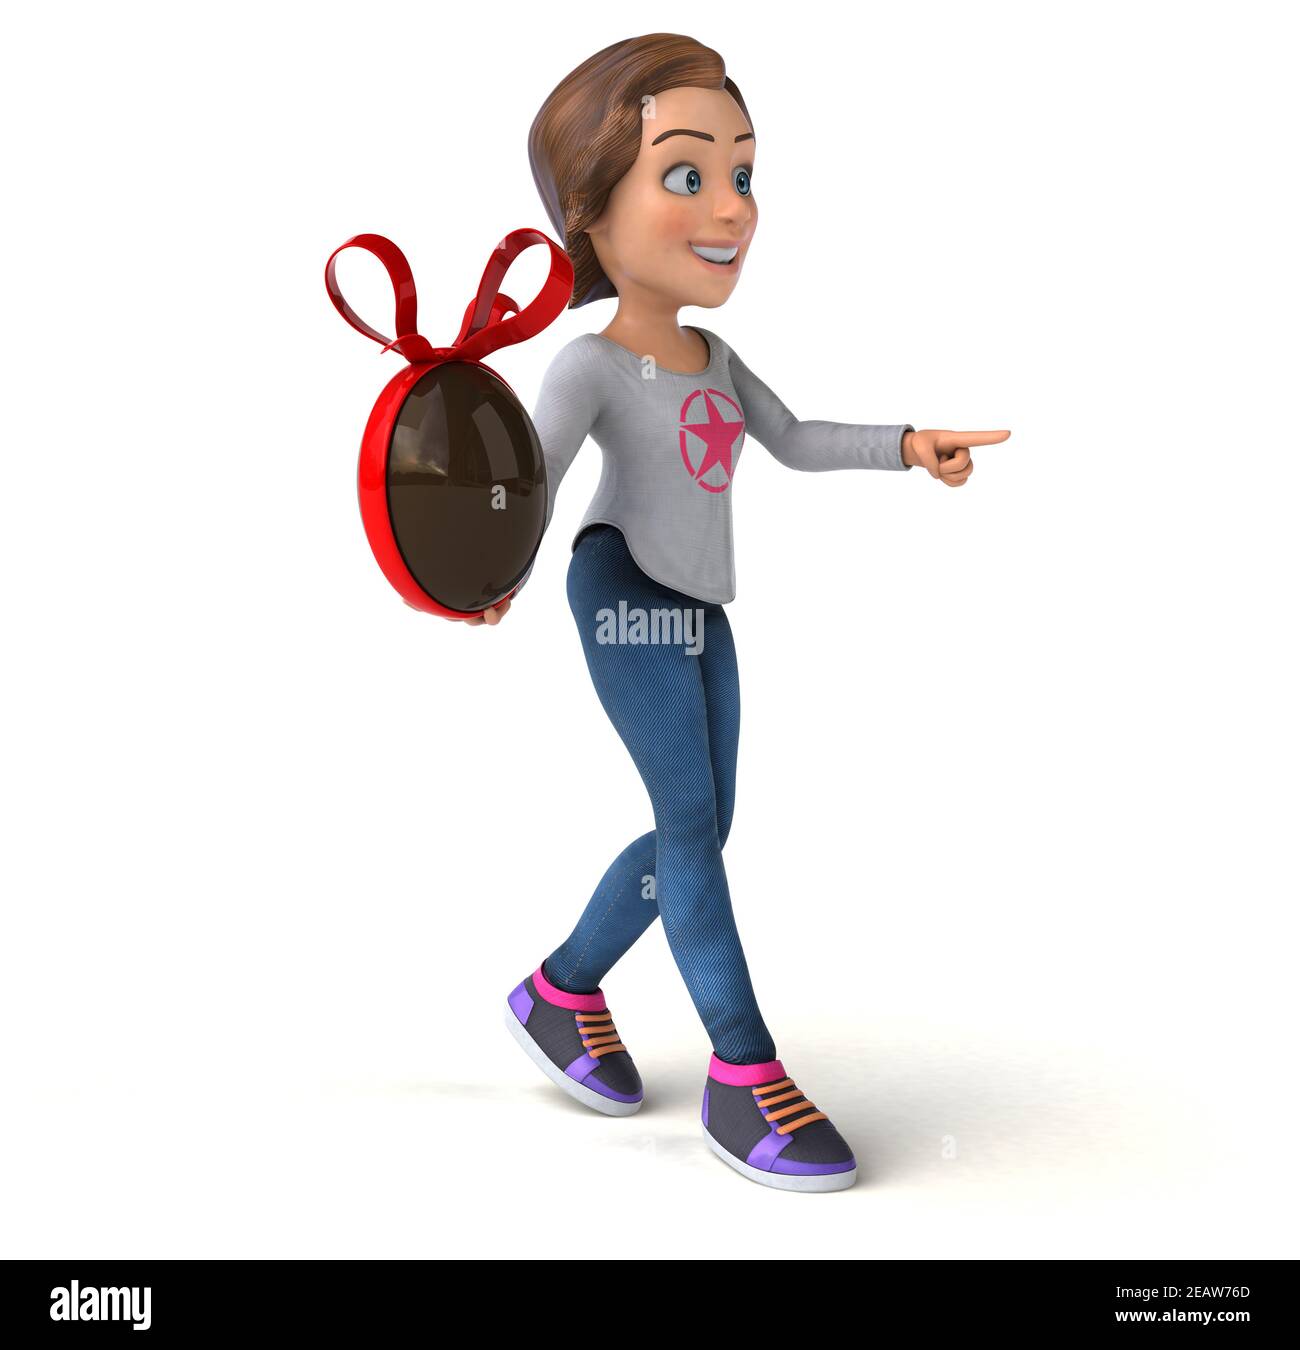 Fun 3D illustration of a cartoon teenage girl Stock Photo